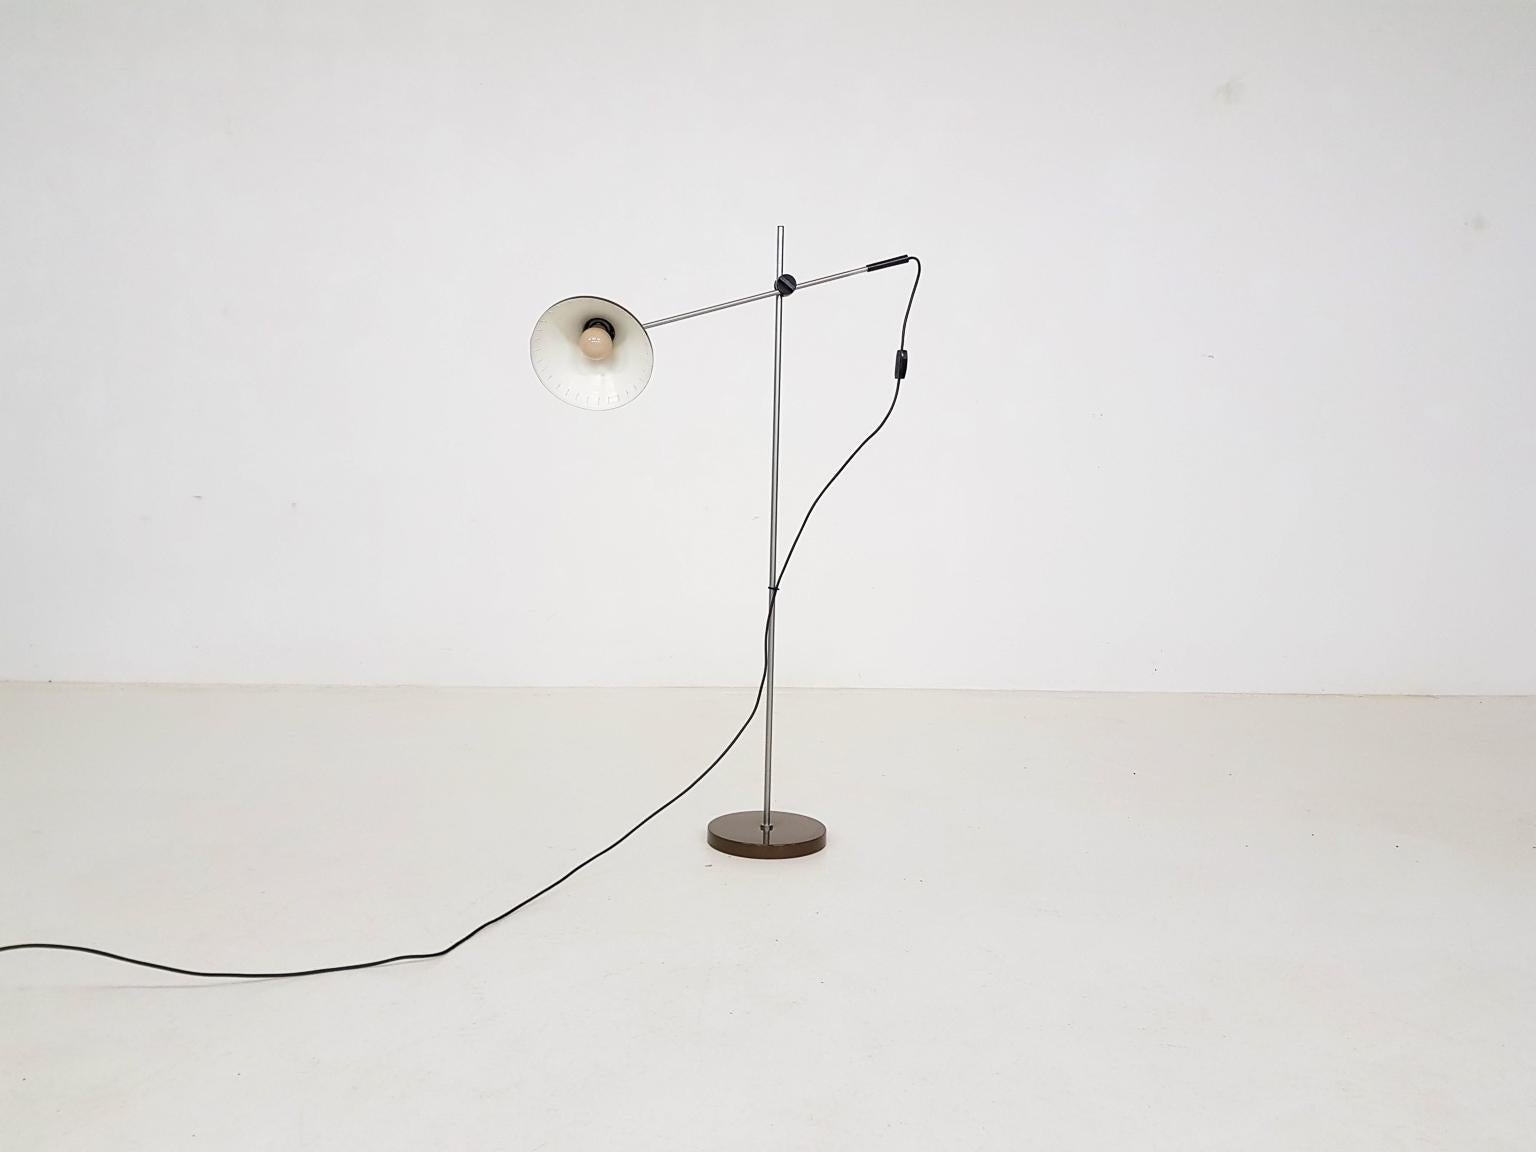 Mid-Century Modern Brown Metal Adjustable Floor Lamp by Anvia Attribute, Hoogervorst, Dutch Design